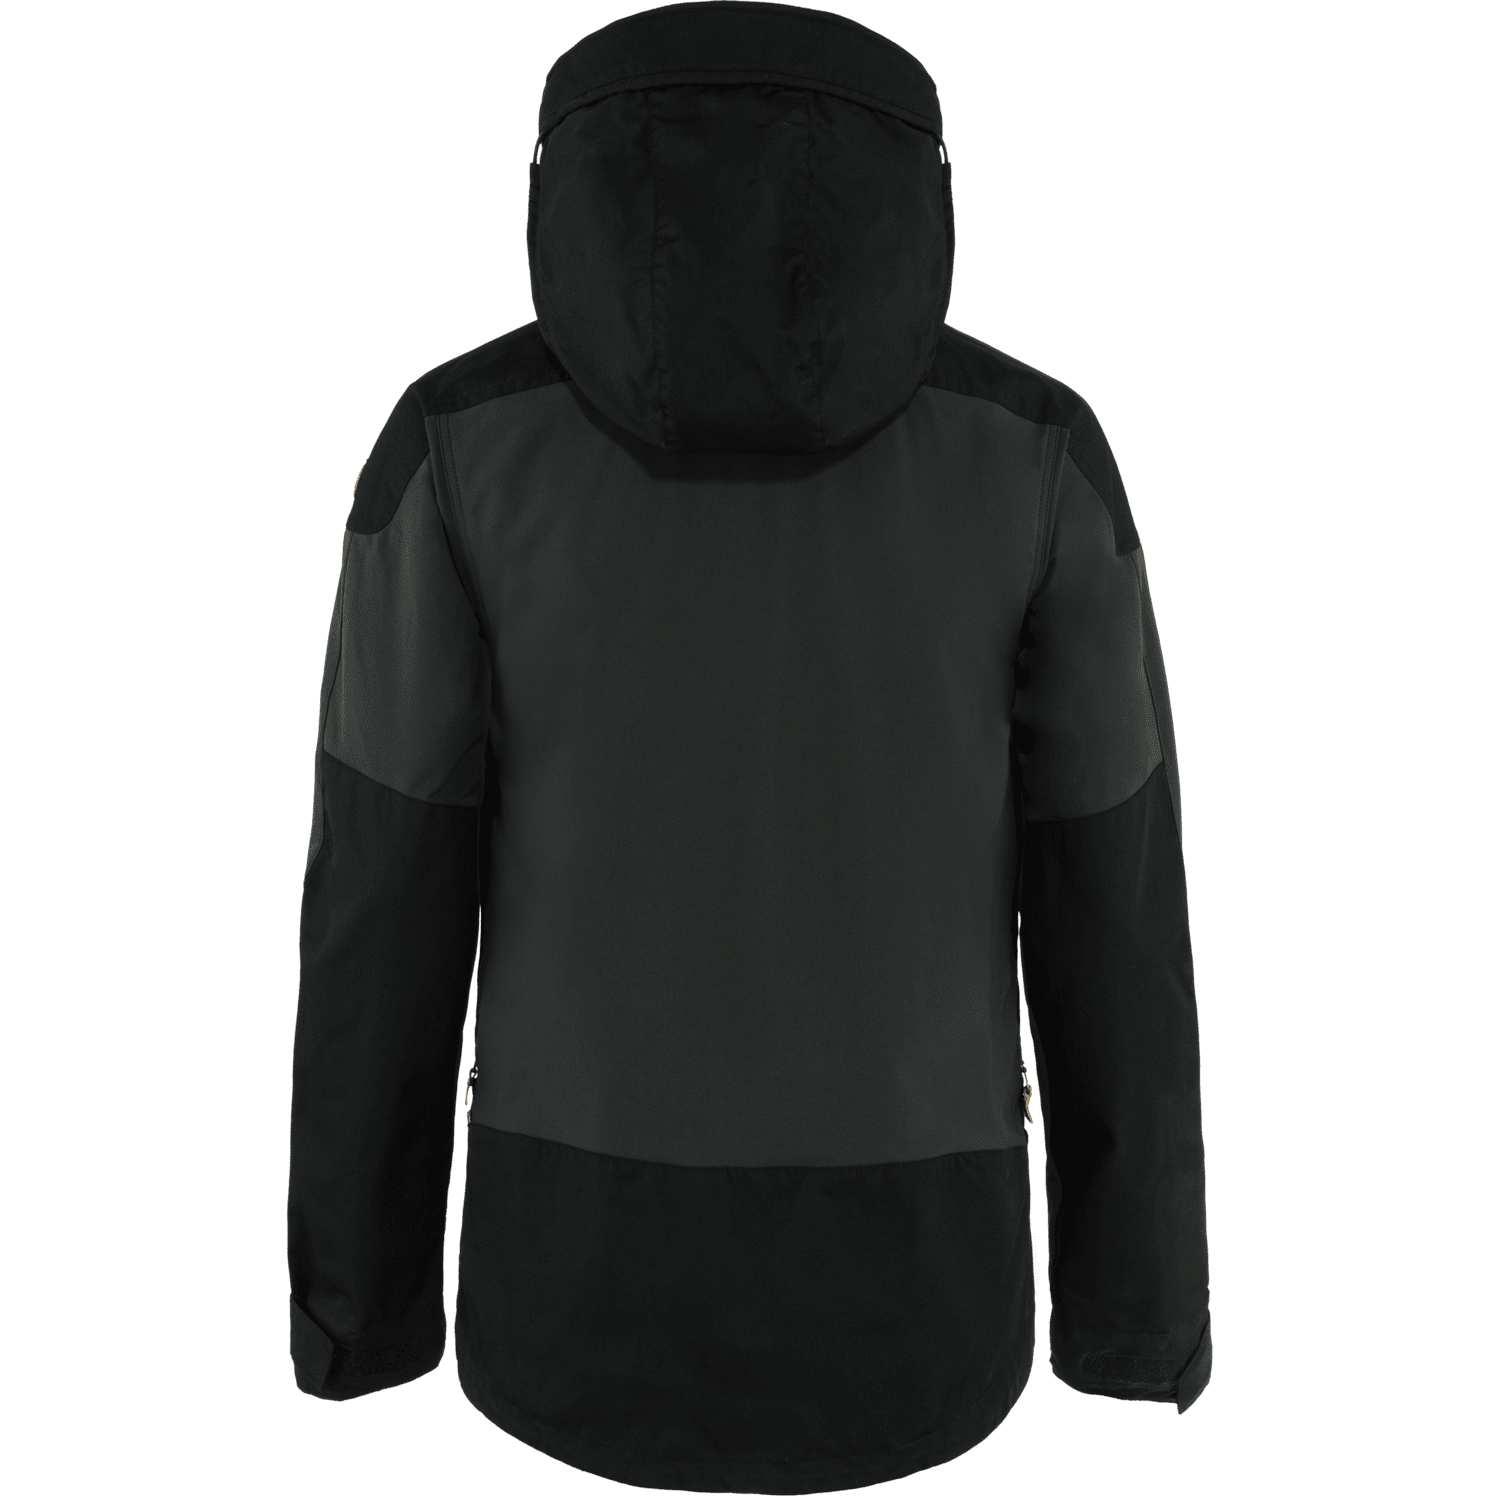 Fjällräven M's Keb Jacket - G-1000® - Recycled Polyester & Organic Cotton Black Jacket